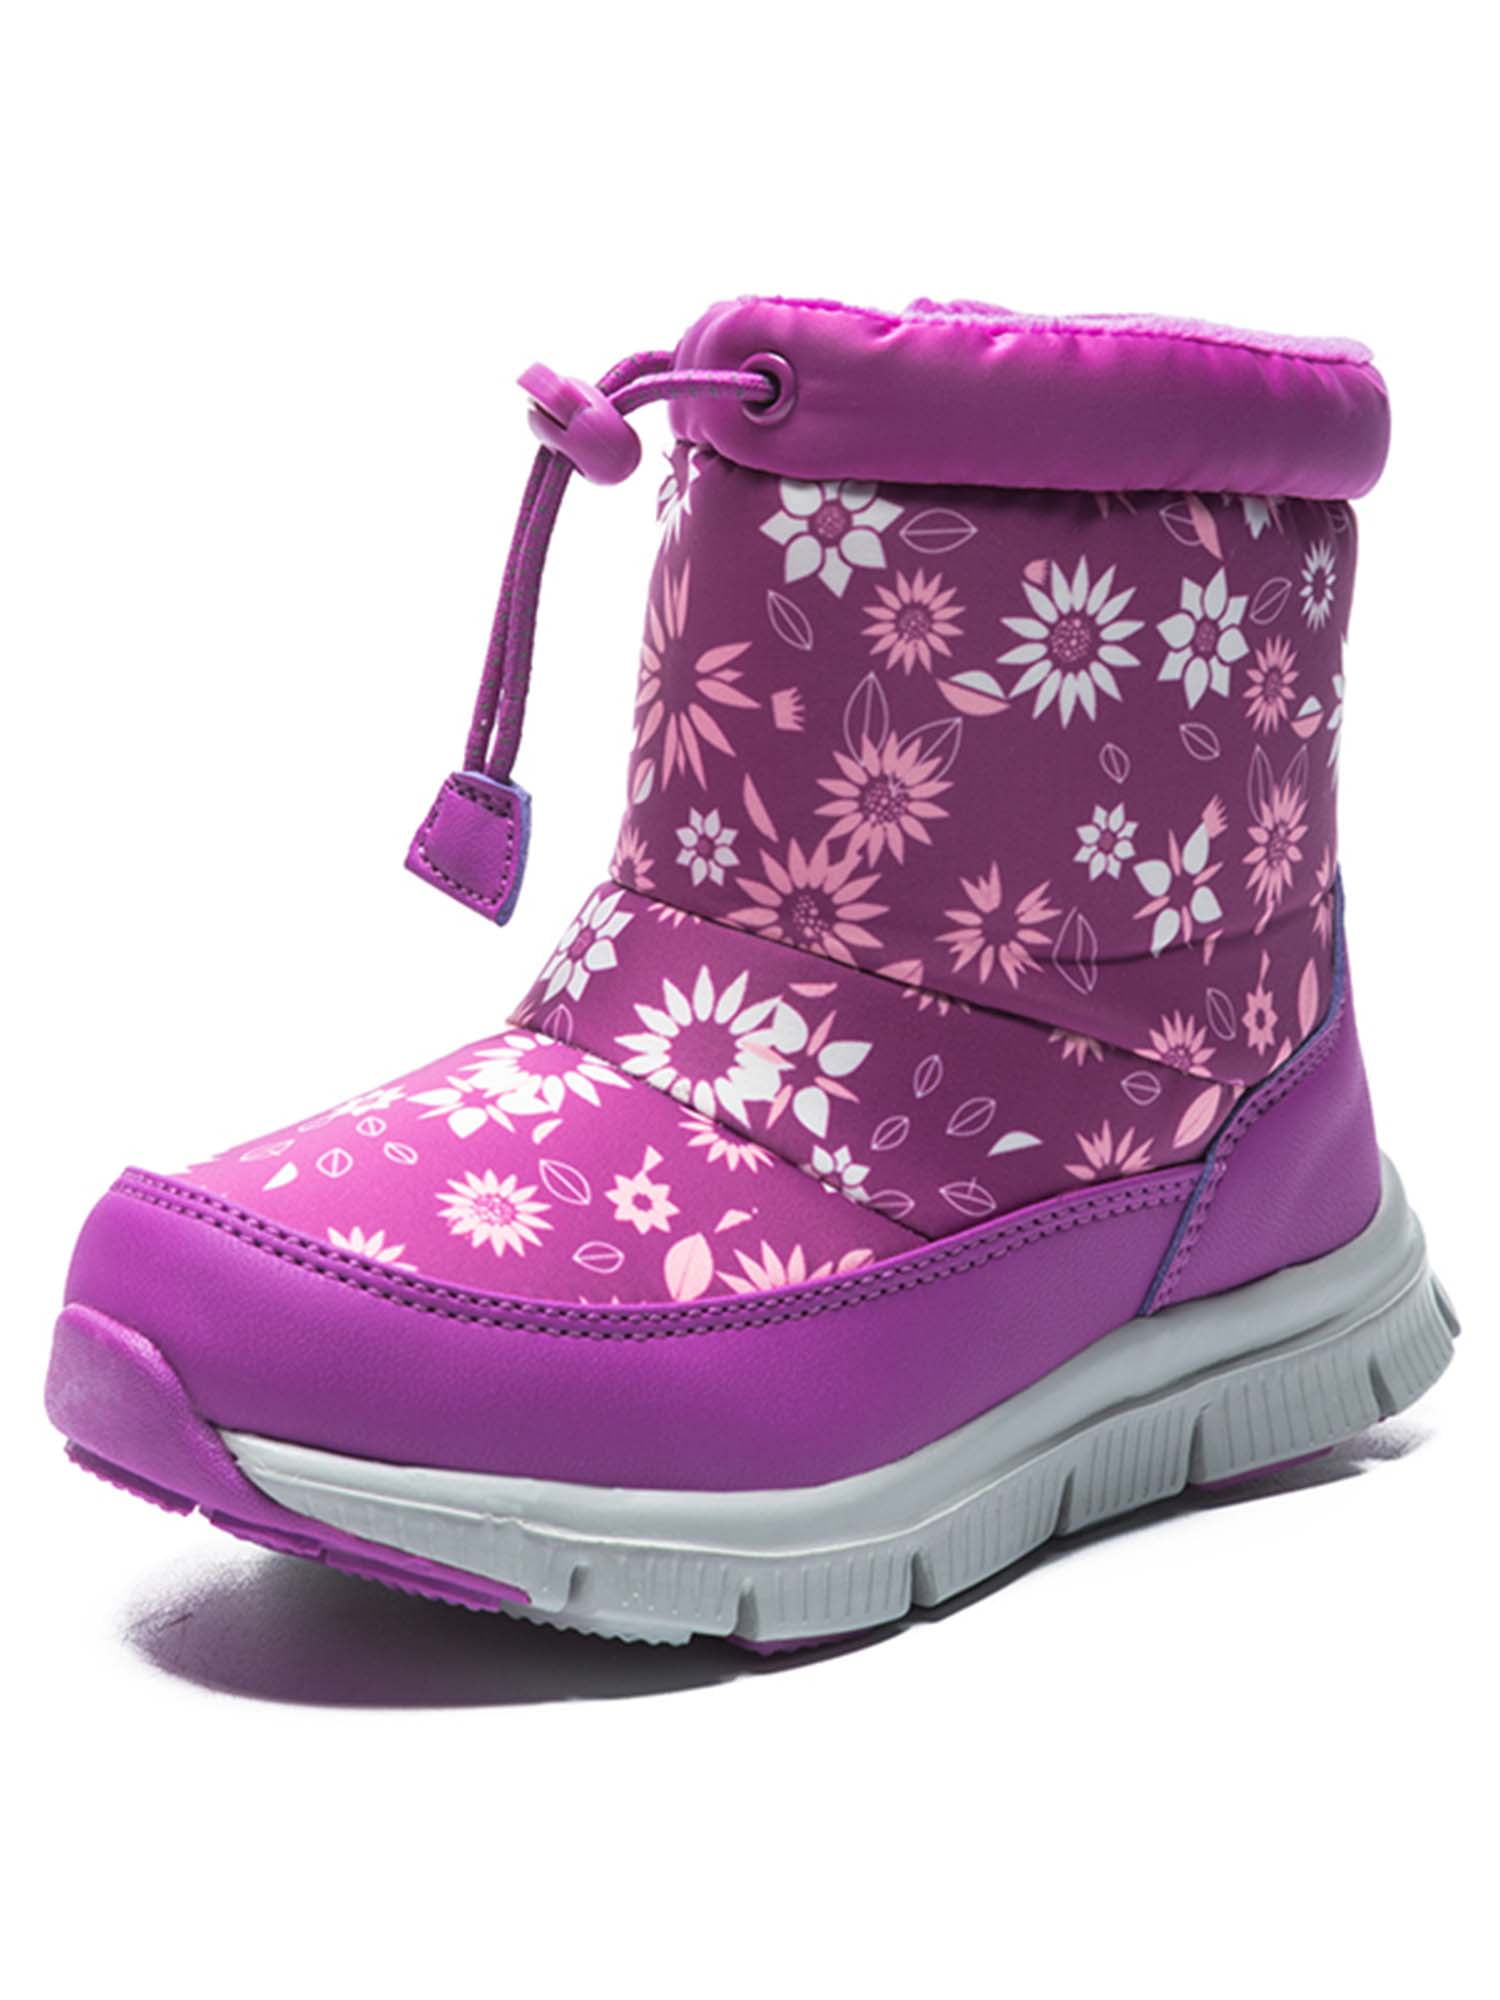 Tanleewa - Girls Toddler/Little Kids/Big Frosty Winter Snow Boots ...